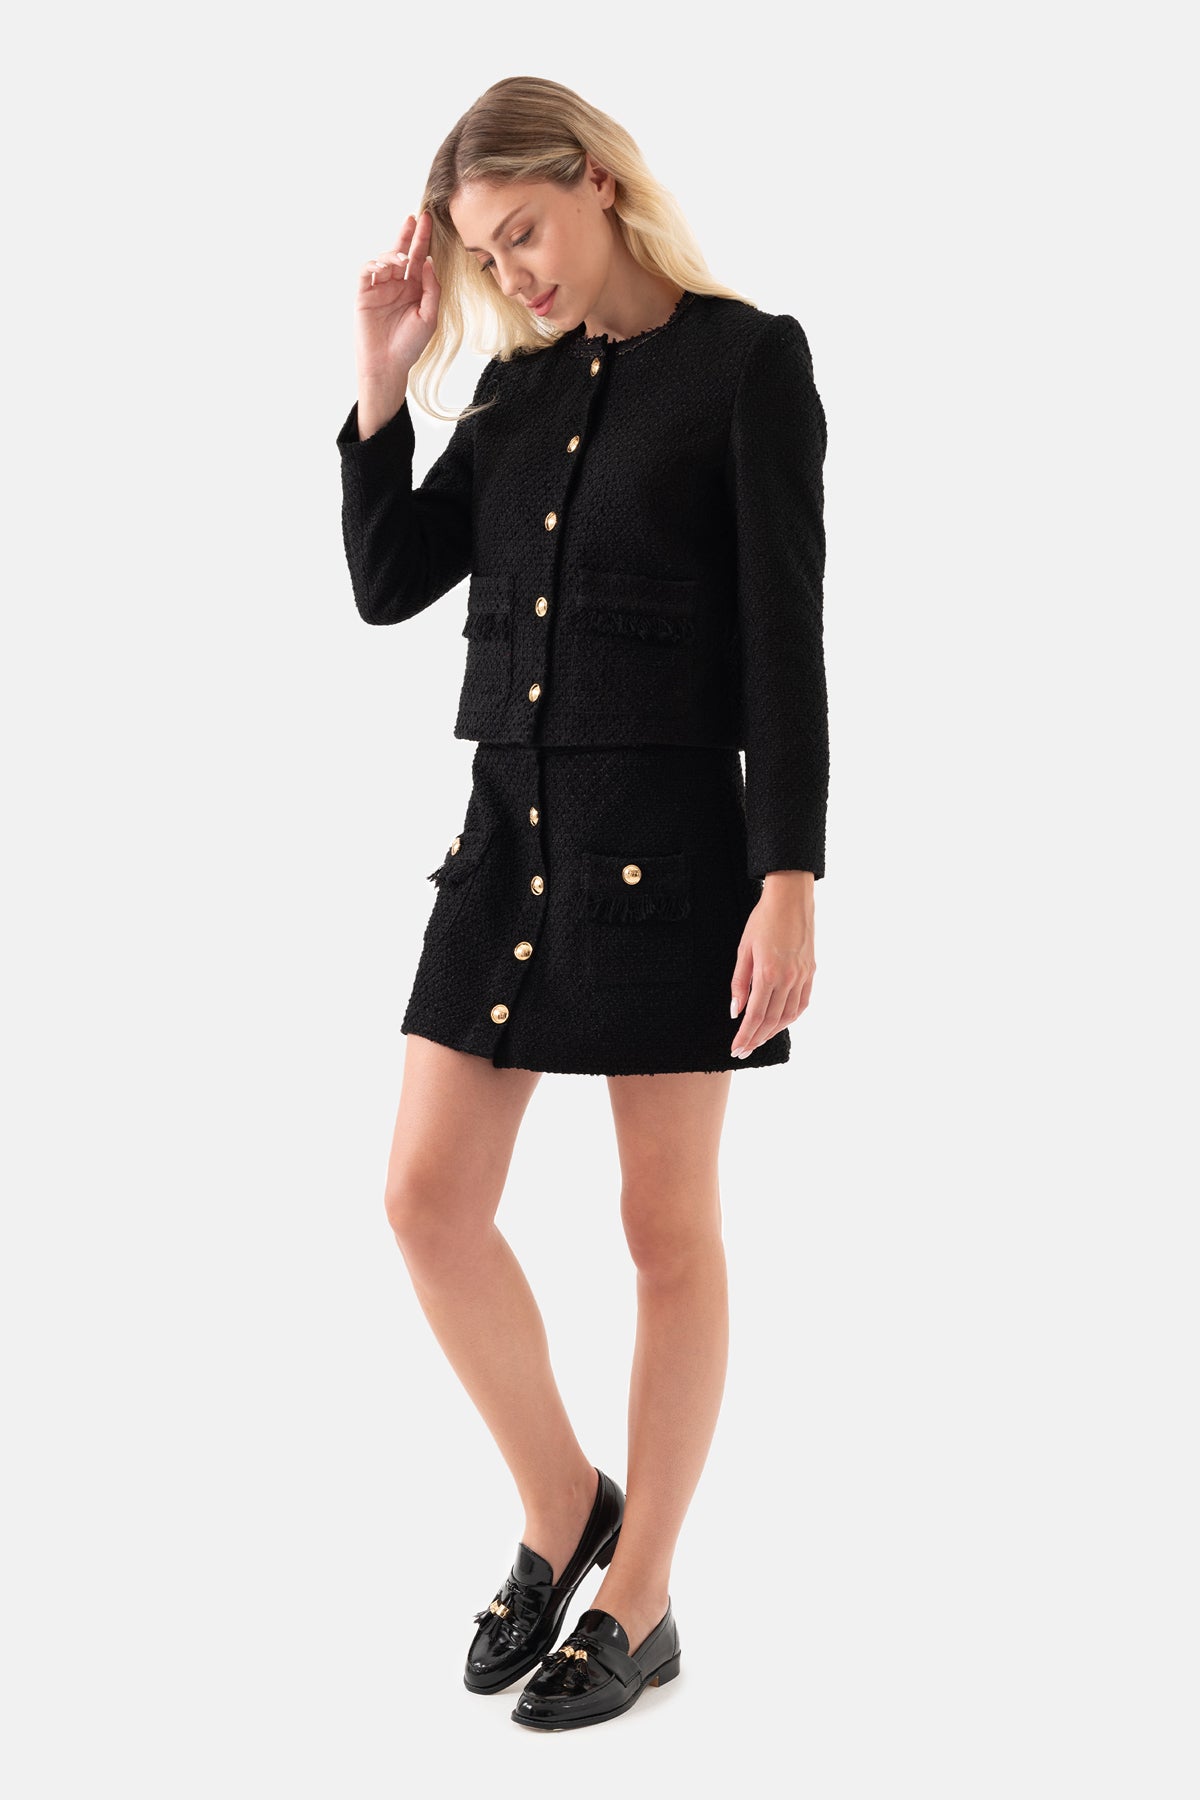 Black Tweed Short Women's Jacket With Pockets